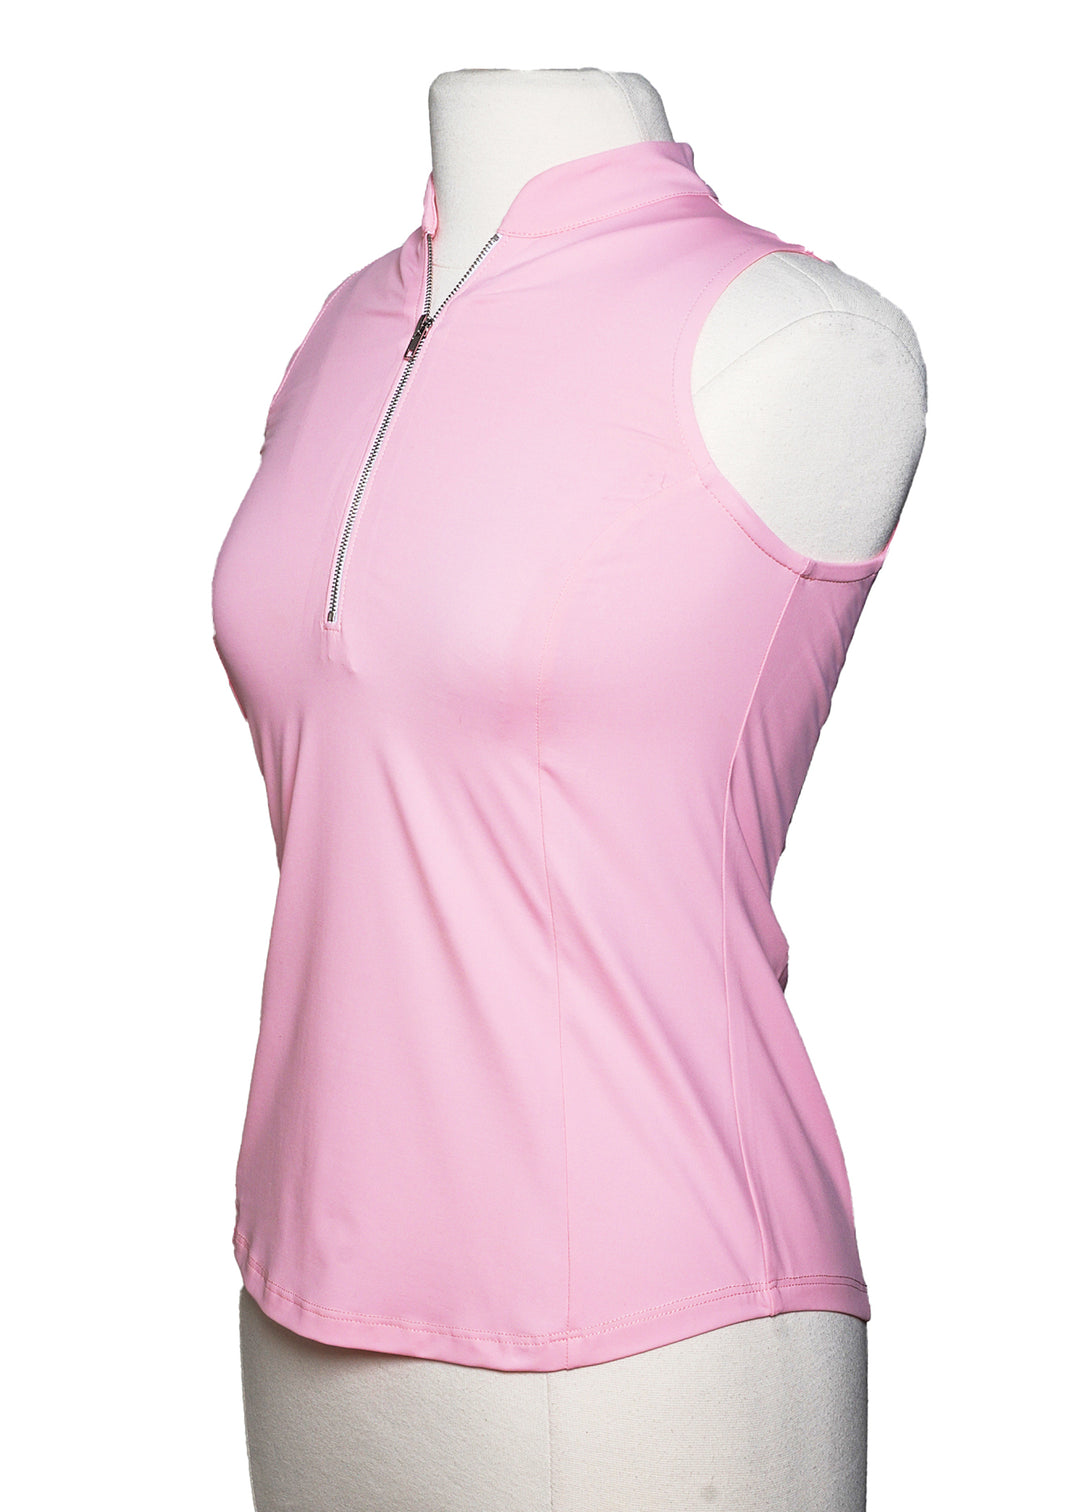 Amy Sport Frontline Sleeveless Silver Zip Top - Light Pink - Size X-Small - Skorzie